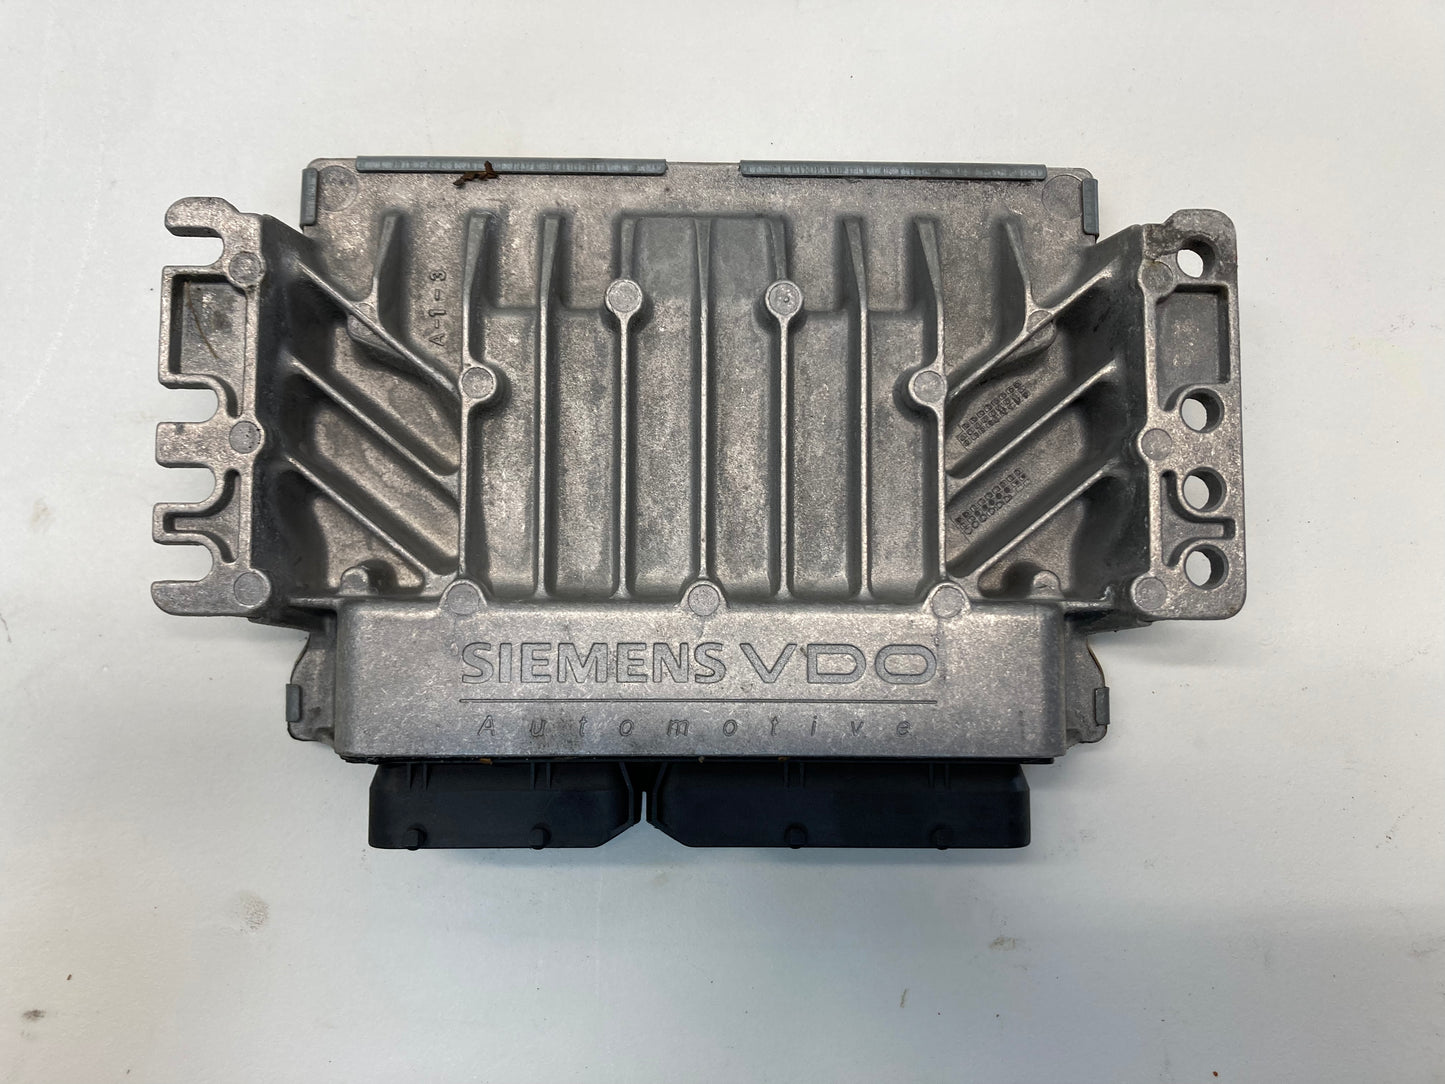 Mini Cooper S DME and Key Set Manual W11 12147557395 05-08 R52 R53 409